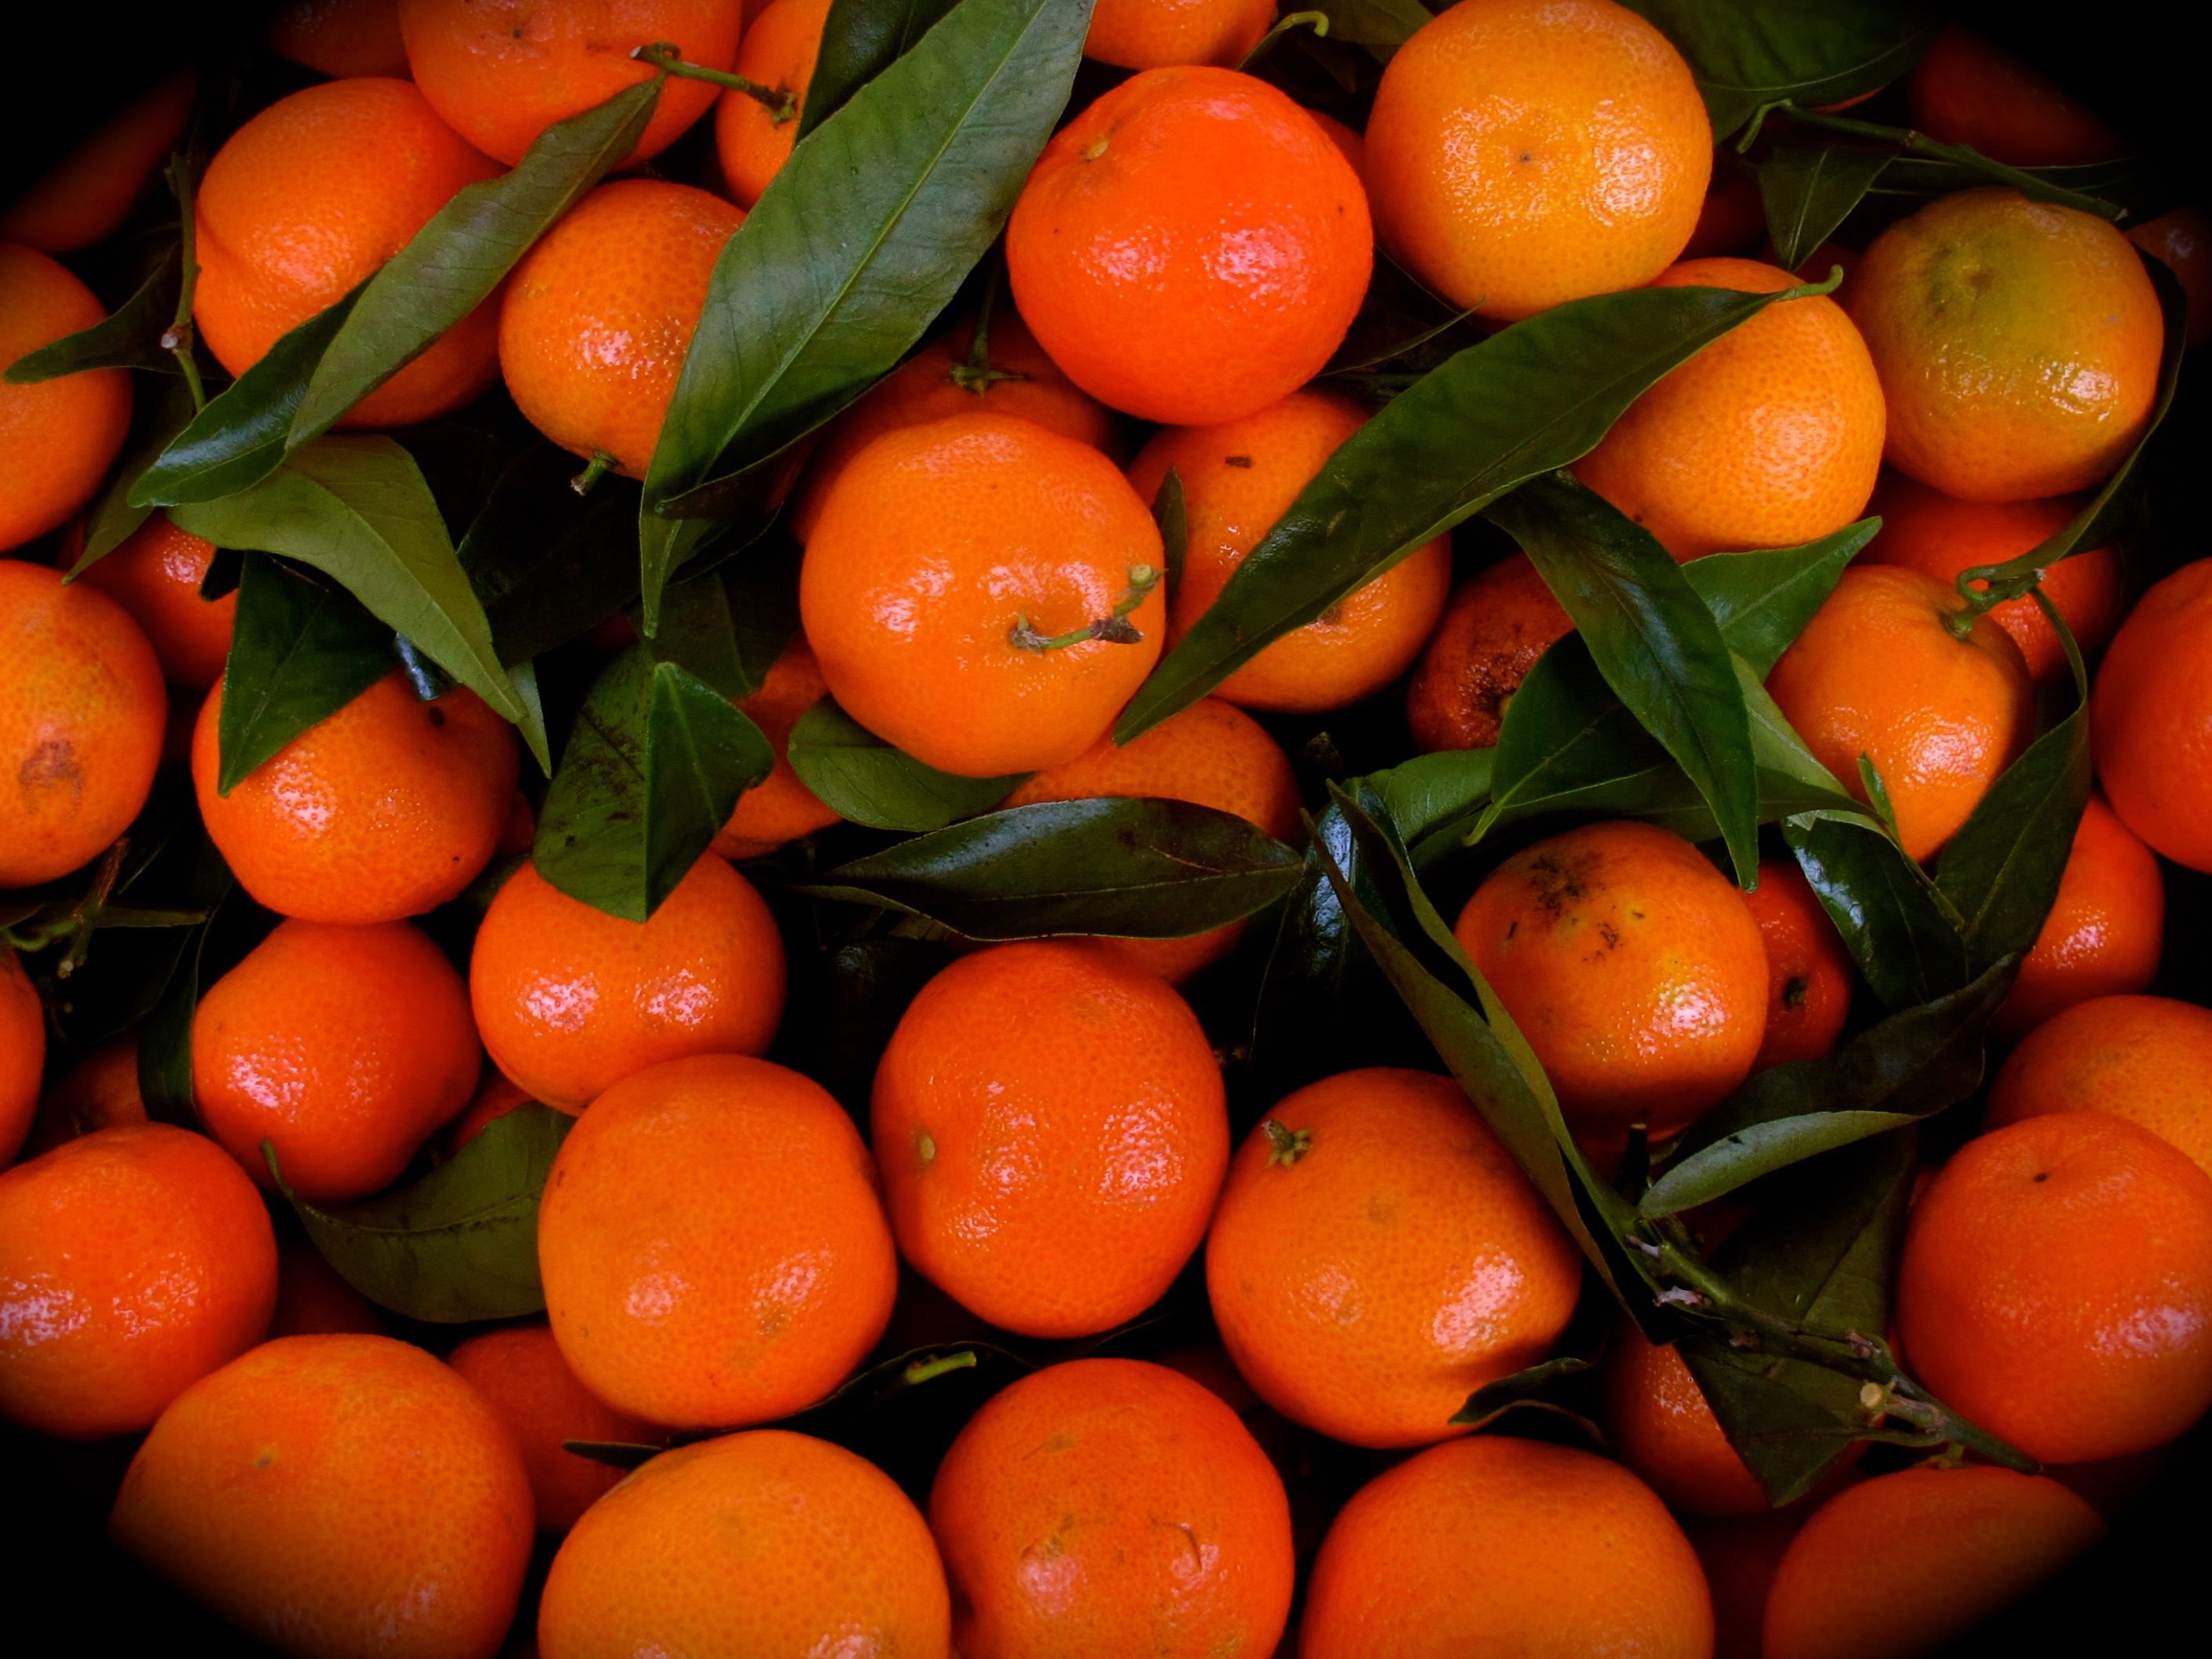 Кухня мандарины. Танжерин фрукт. Мандарины. Мандарины много. Оранжевый цвет.